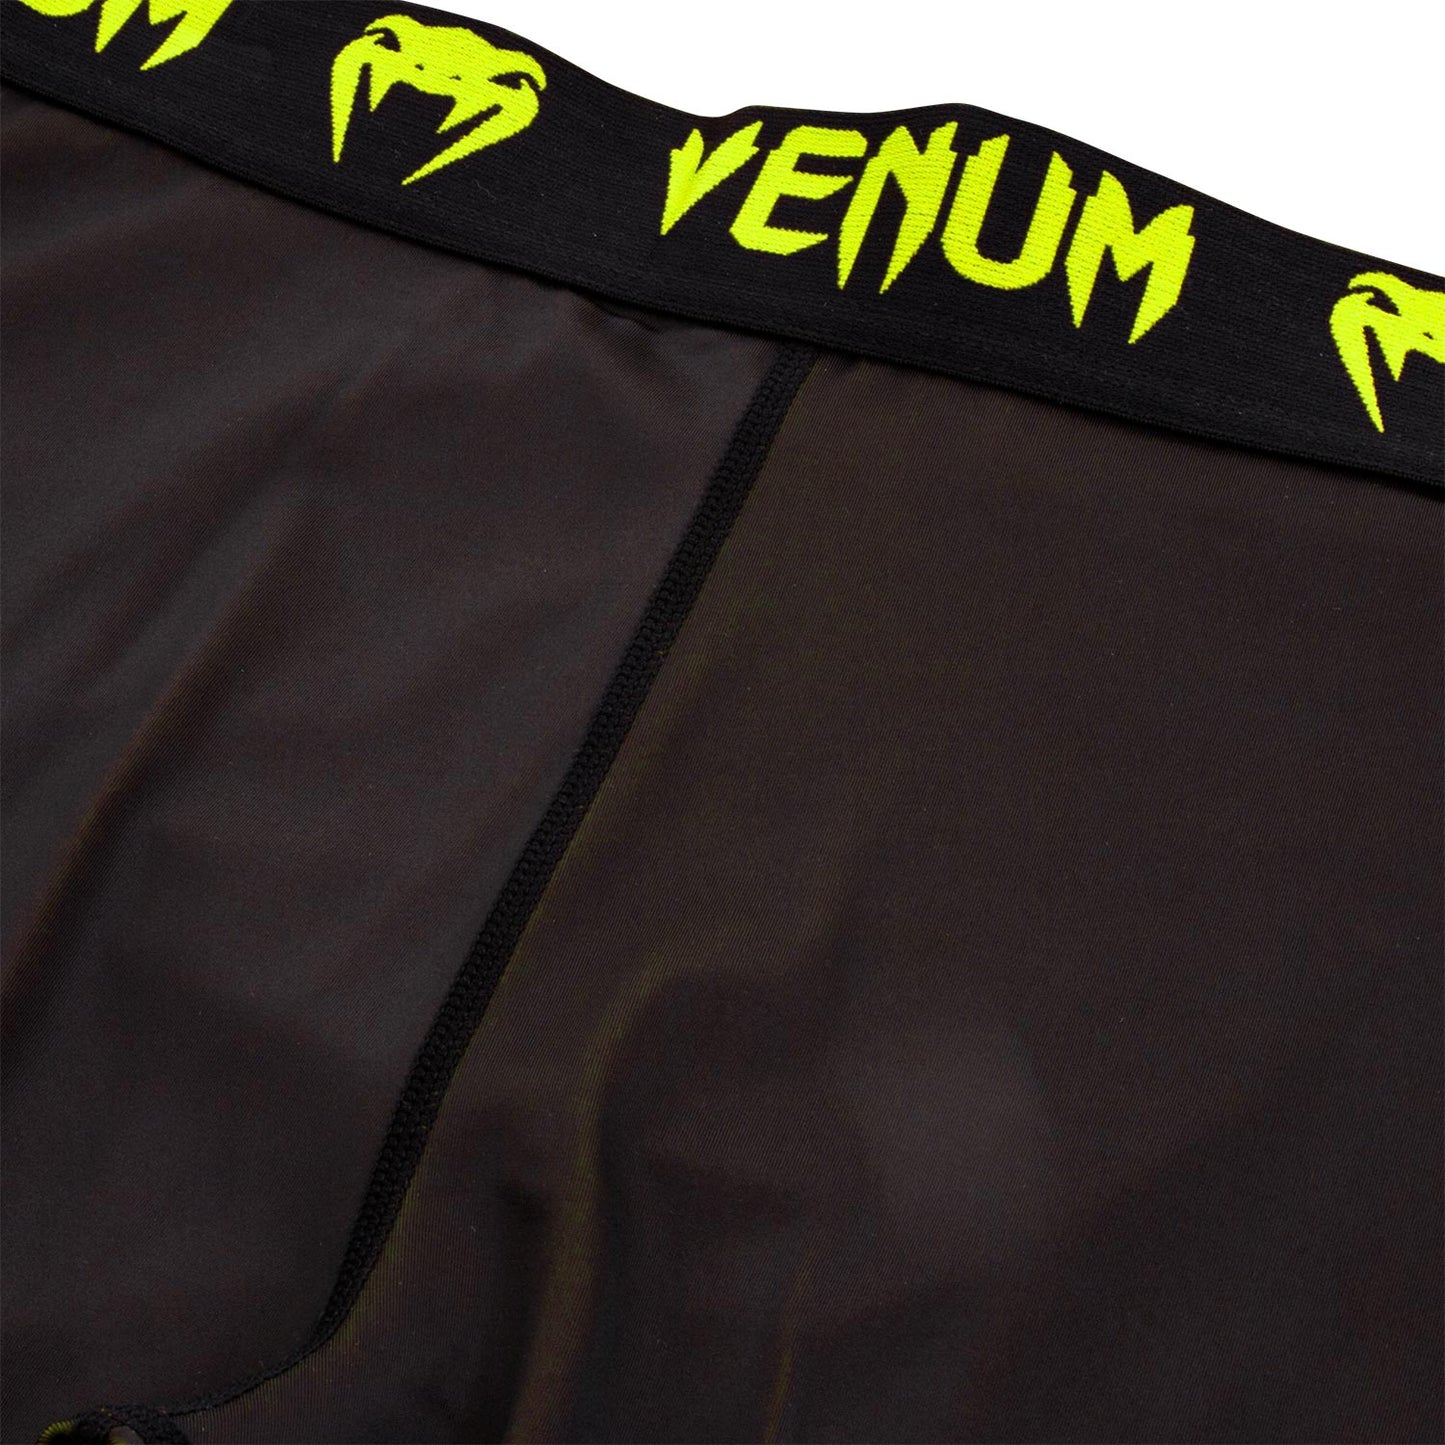 Venum Giant Compression Tights - Black/Neo Yellow